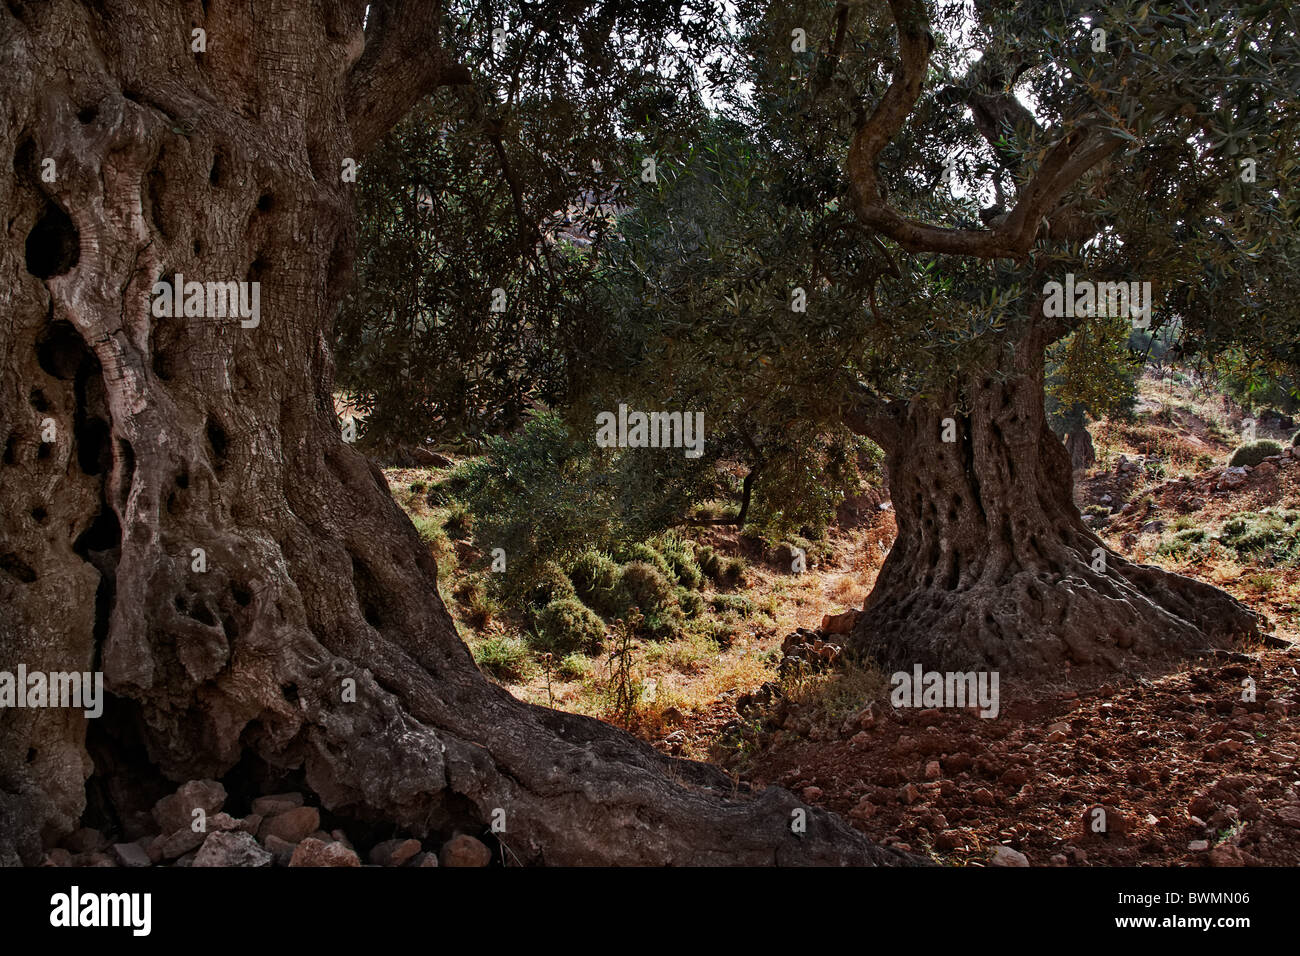 Olive tree, Stock Photo